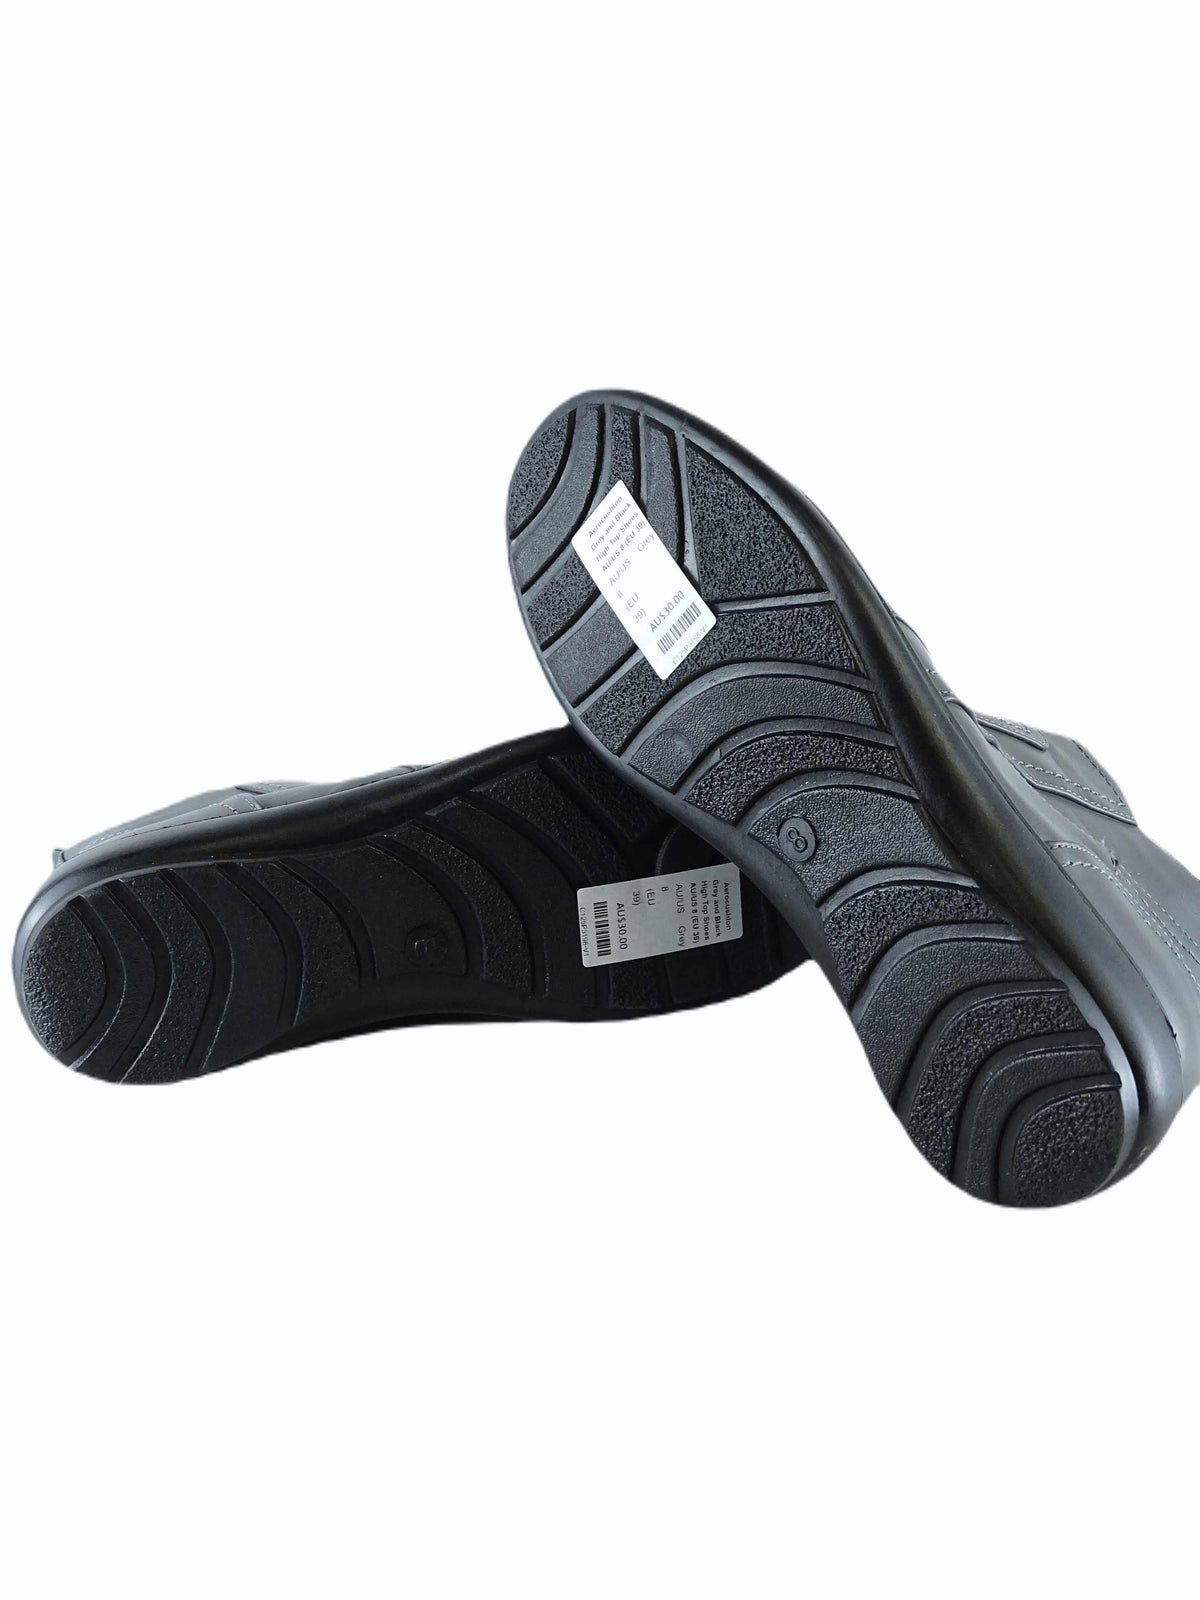 Aerocushion Grey and Black High Top Shoes AU/US 8 (EU 39)